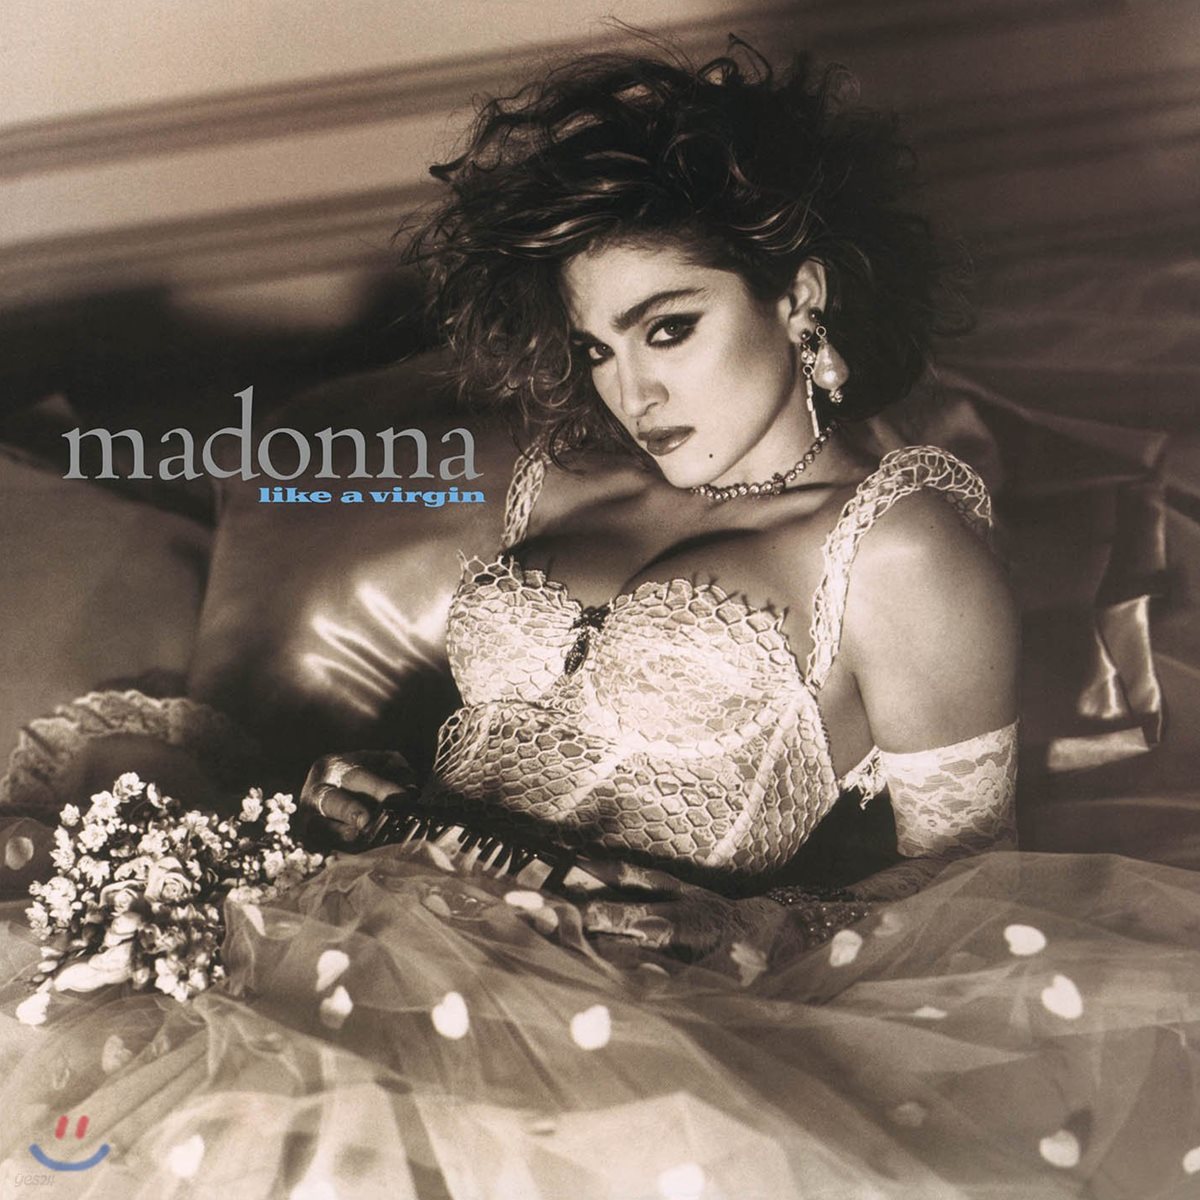 Madonna (마돈나) - 2집 Like A Virgin [LP]